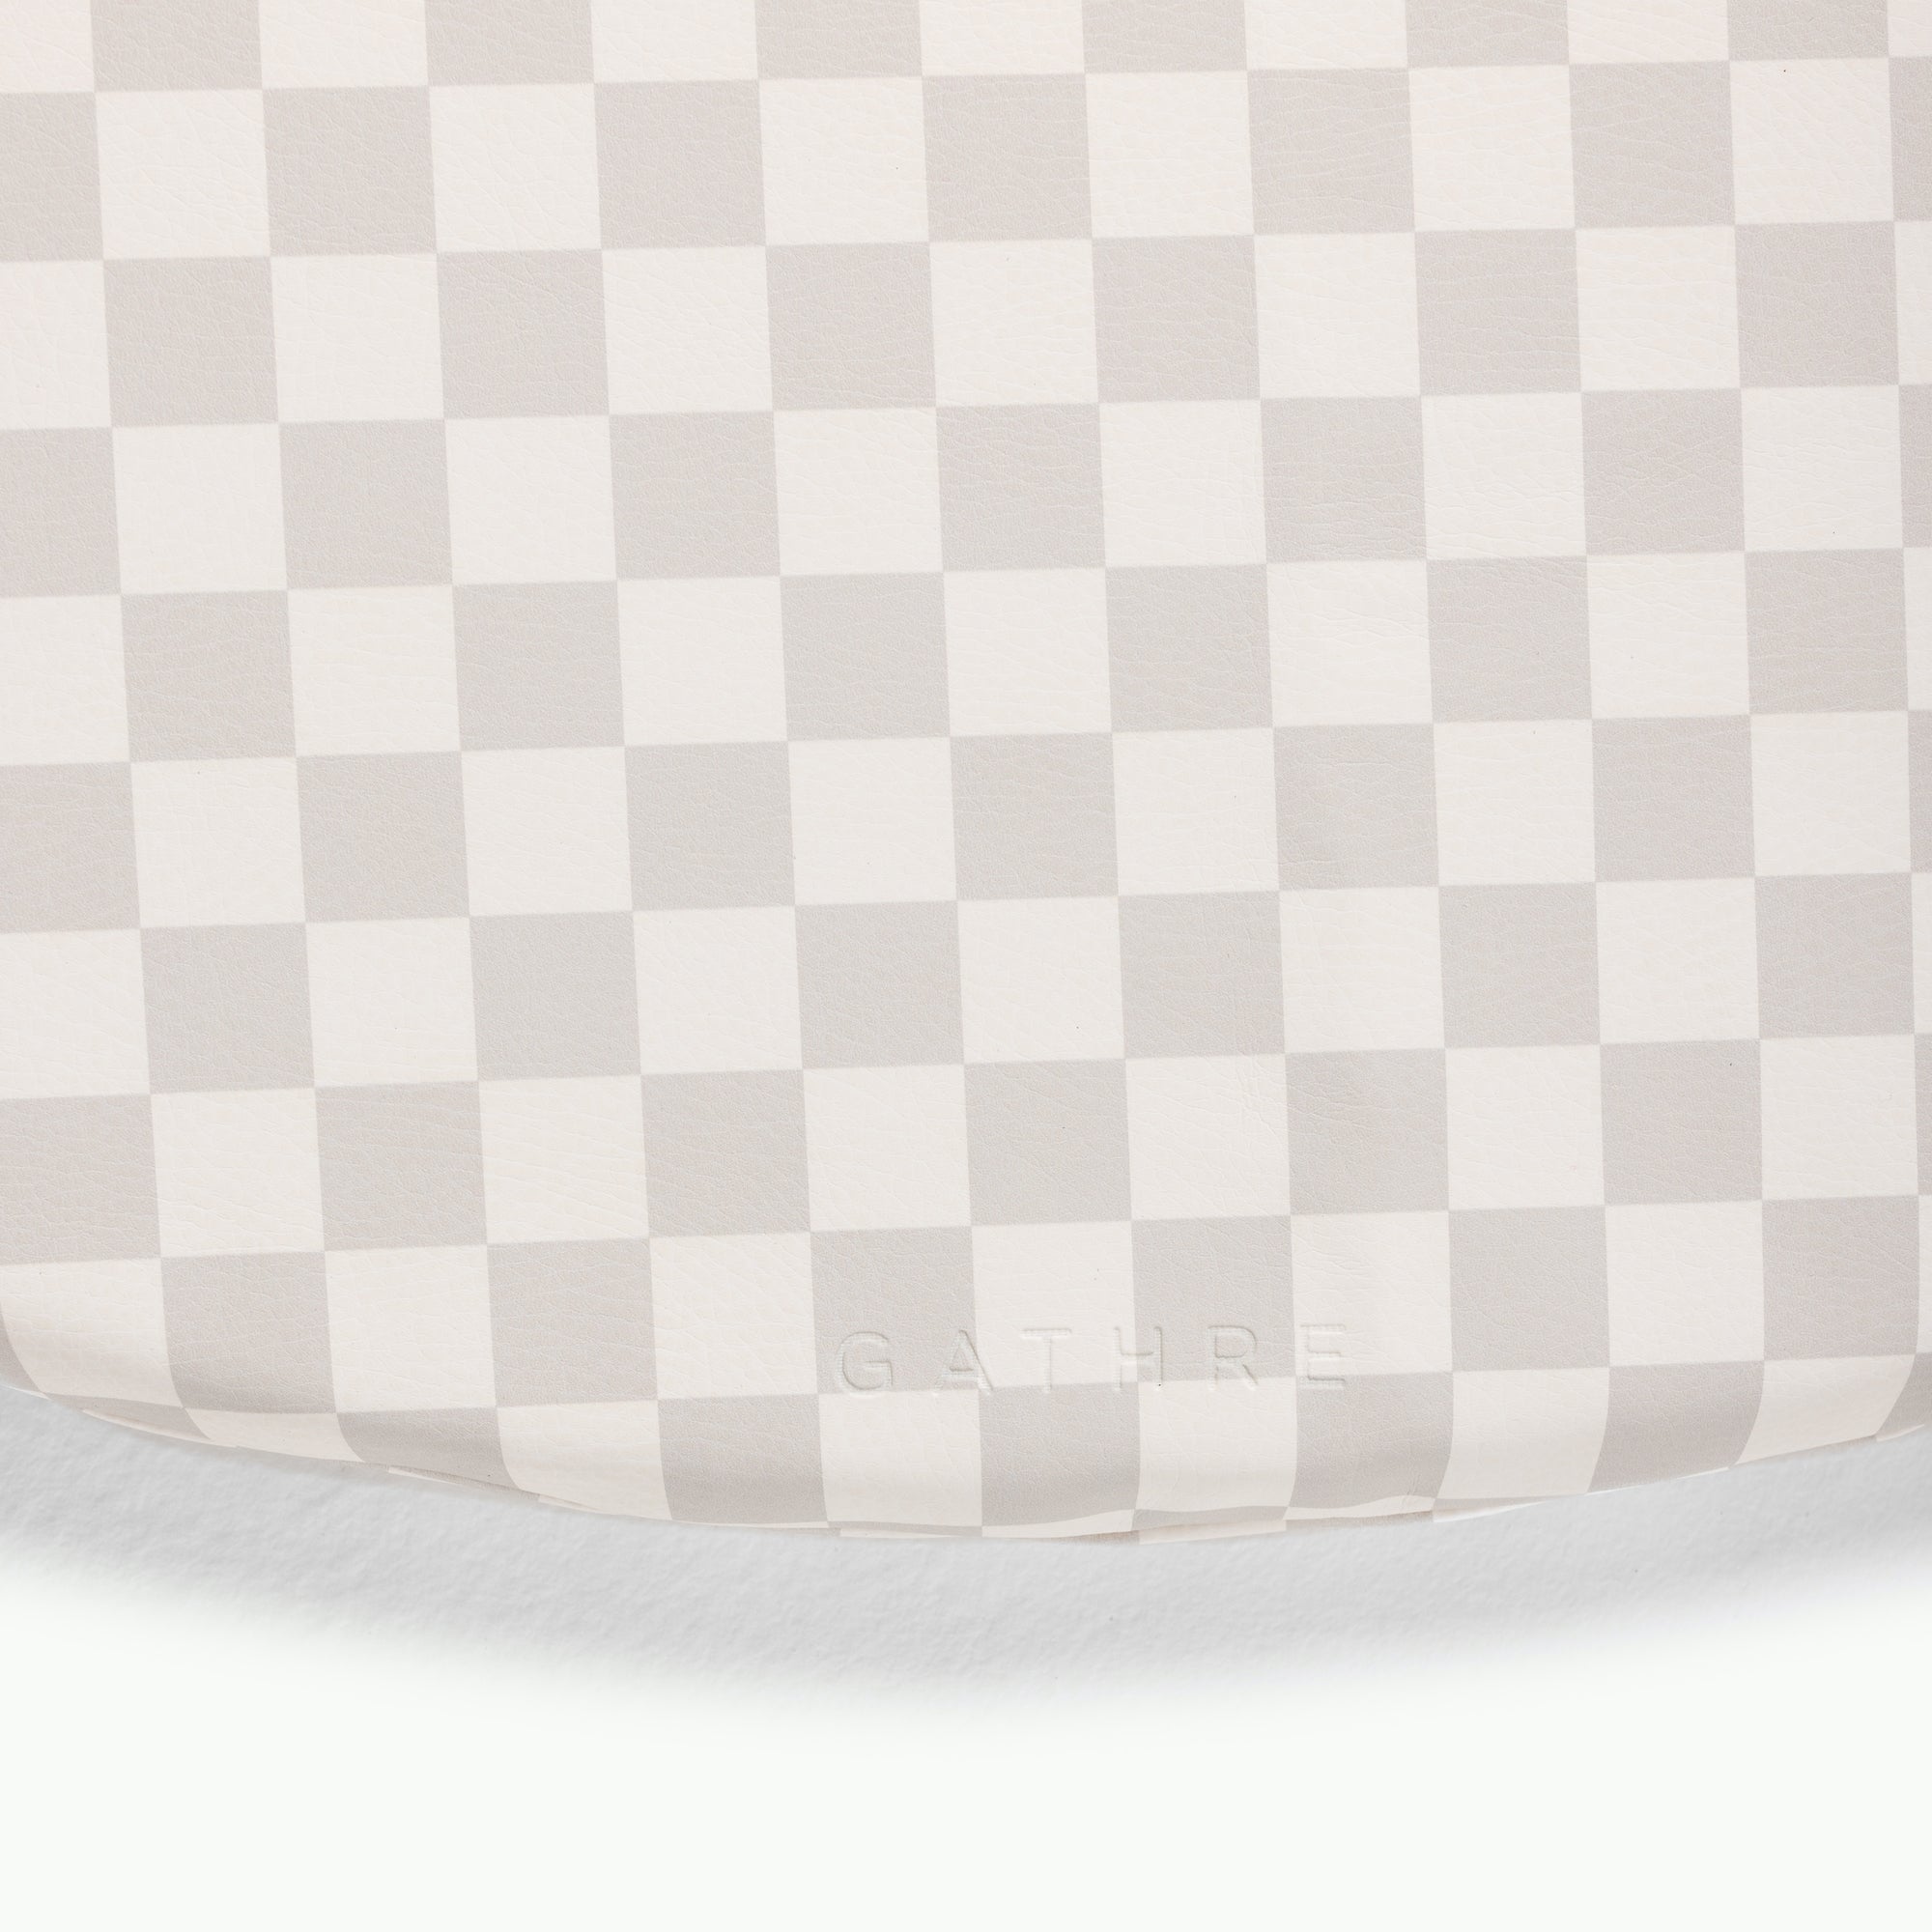 Rook / Circle@deboss detail of padded mat